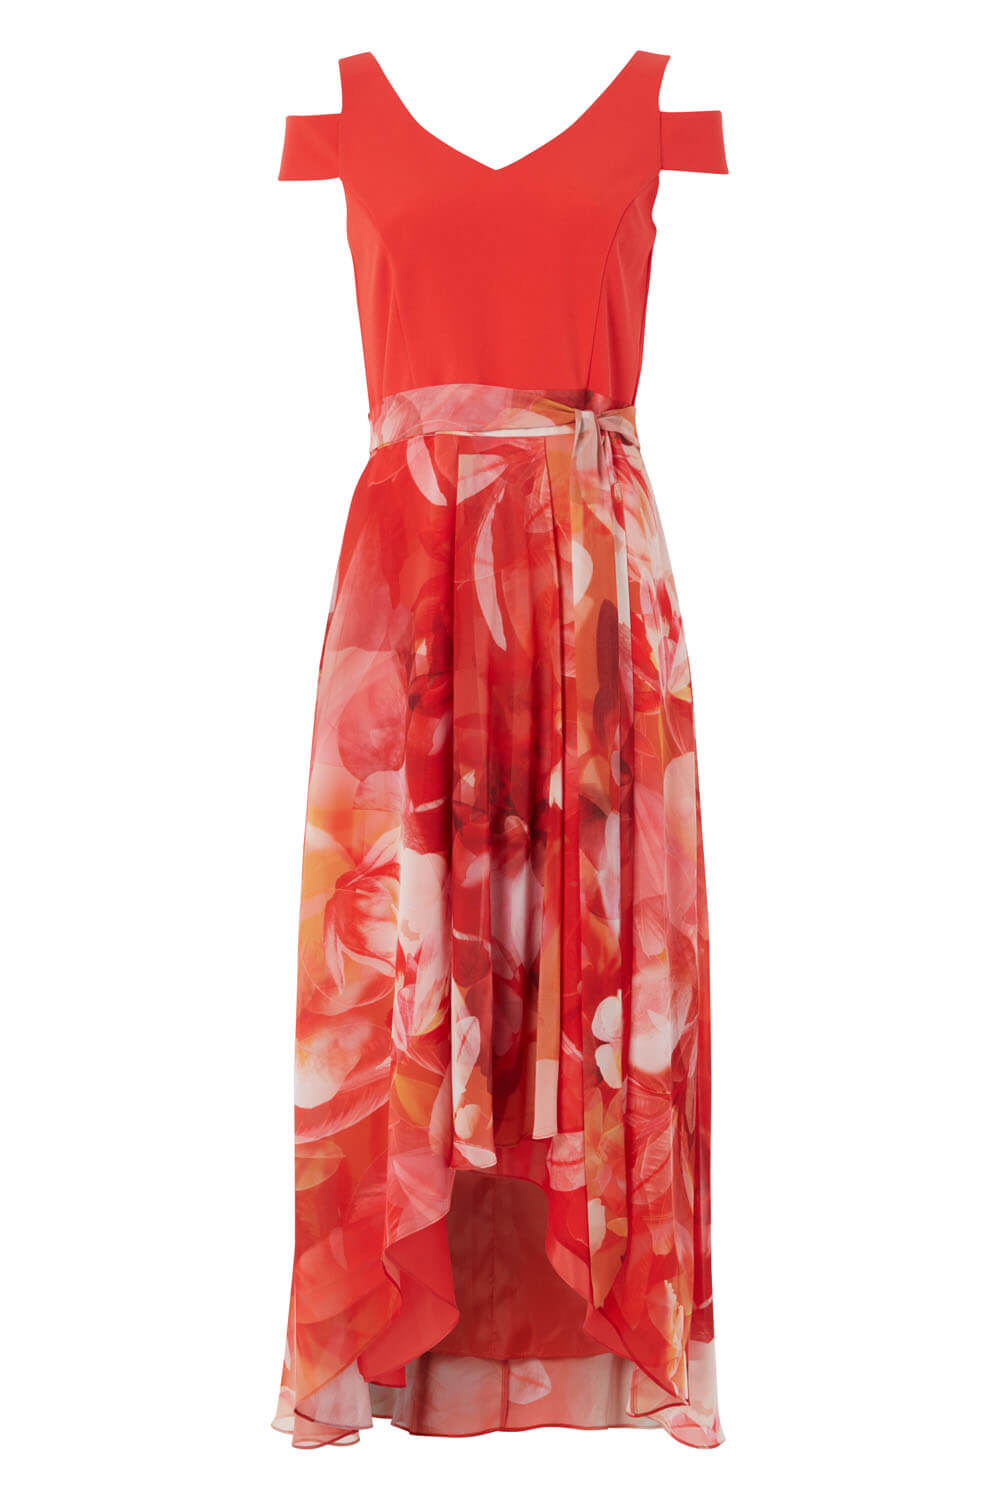 CORAL Floral Print Cold Shoulder Maxi Dress, Image 4 of 4